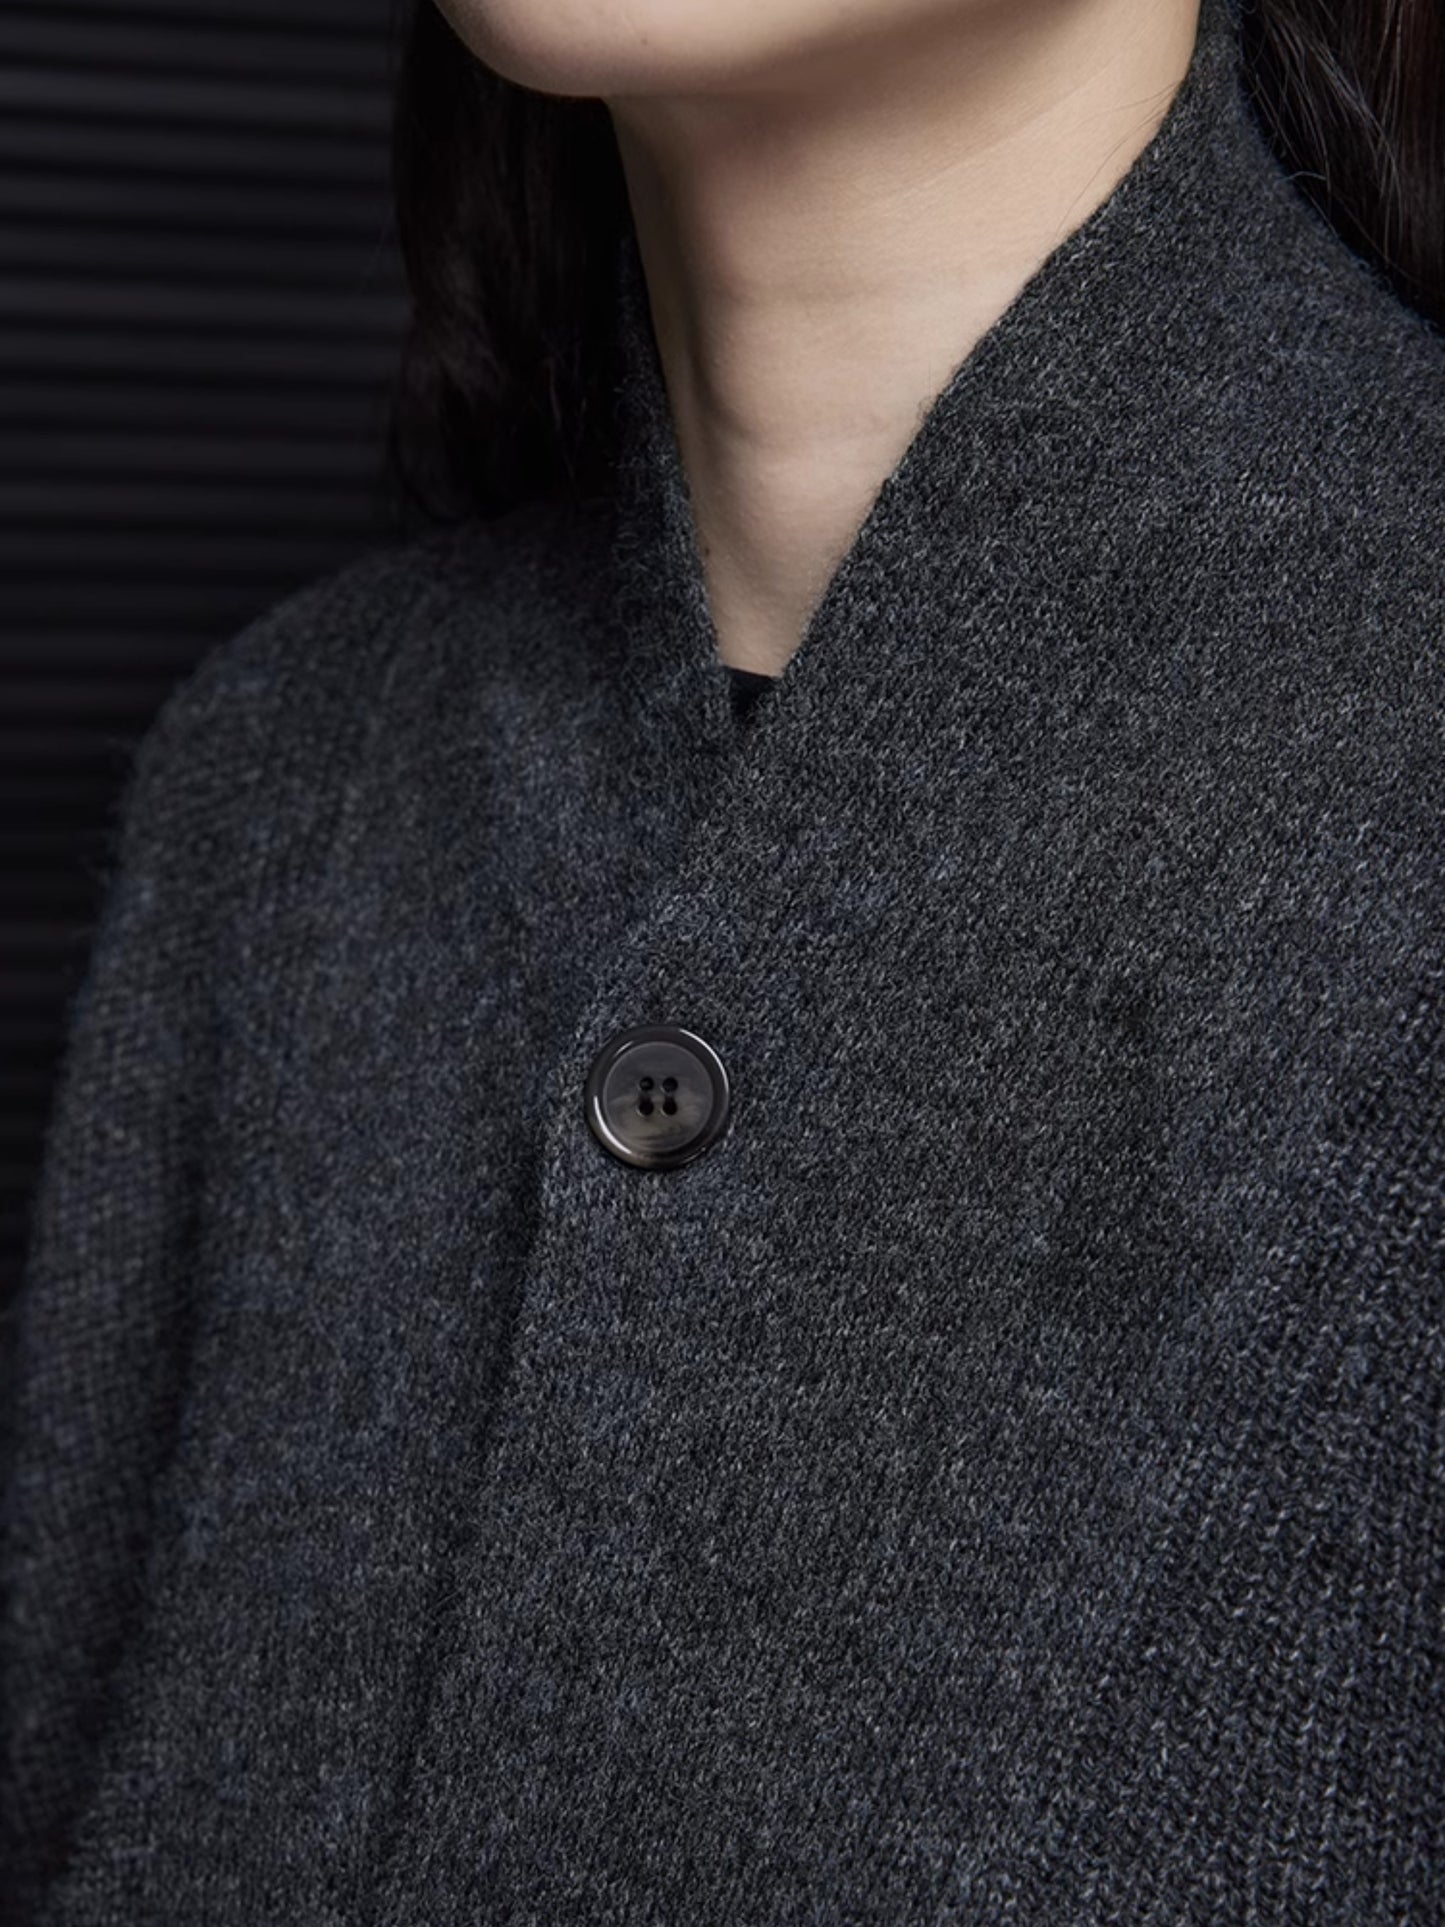 V-neck 버튼 darkgray sweater_BDHL5502